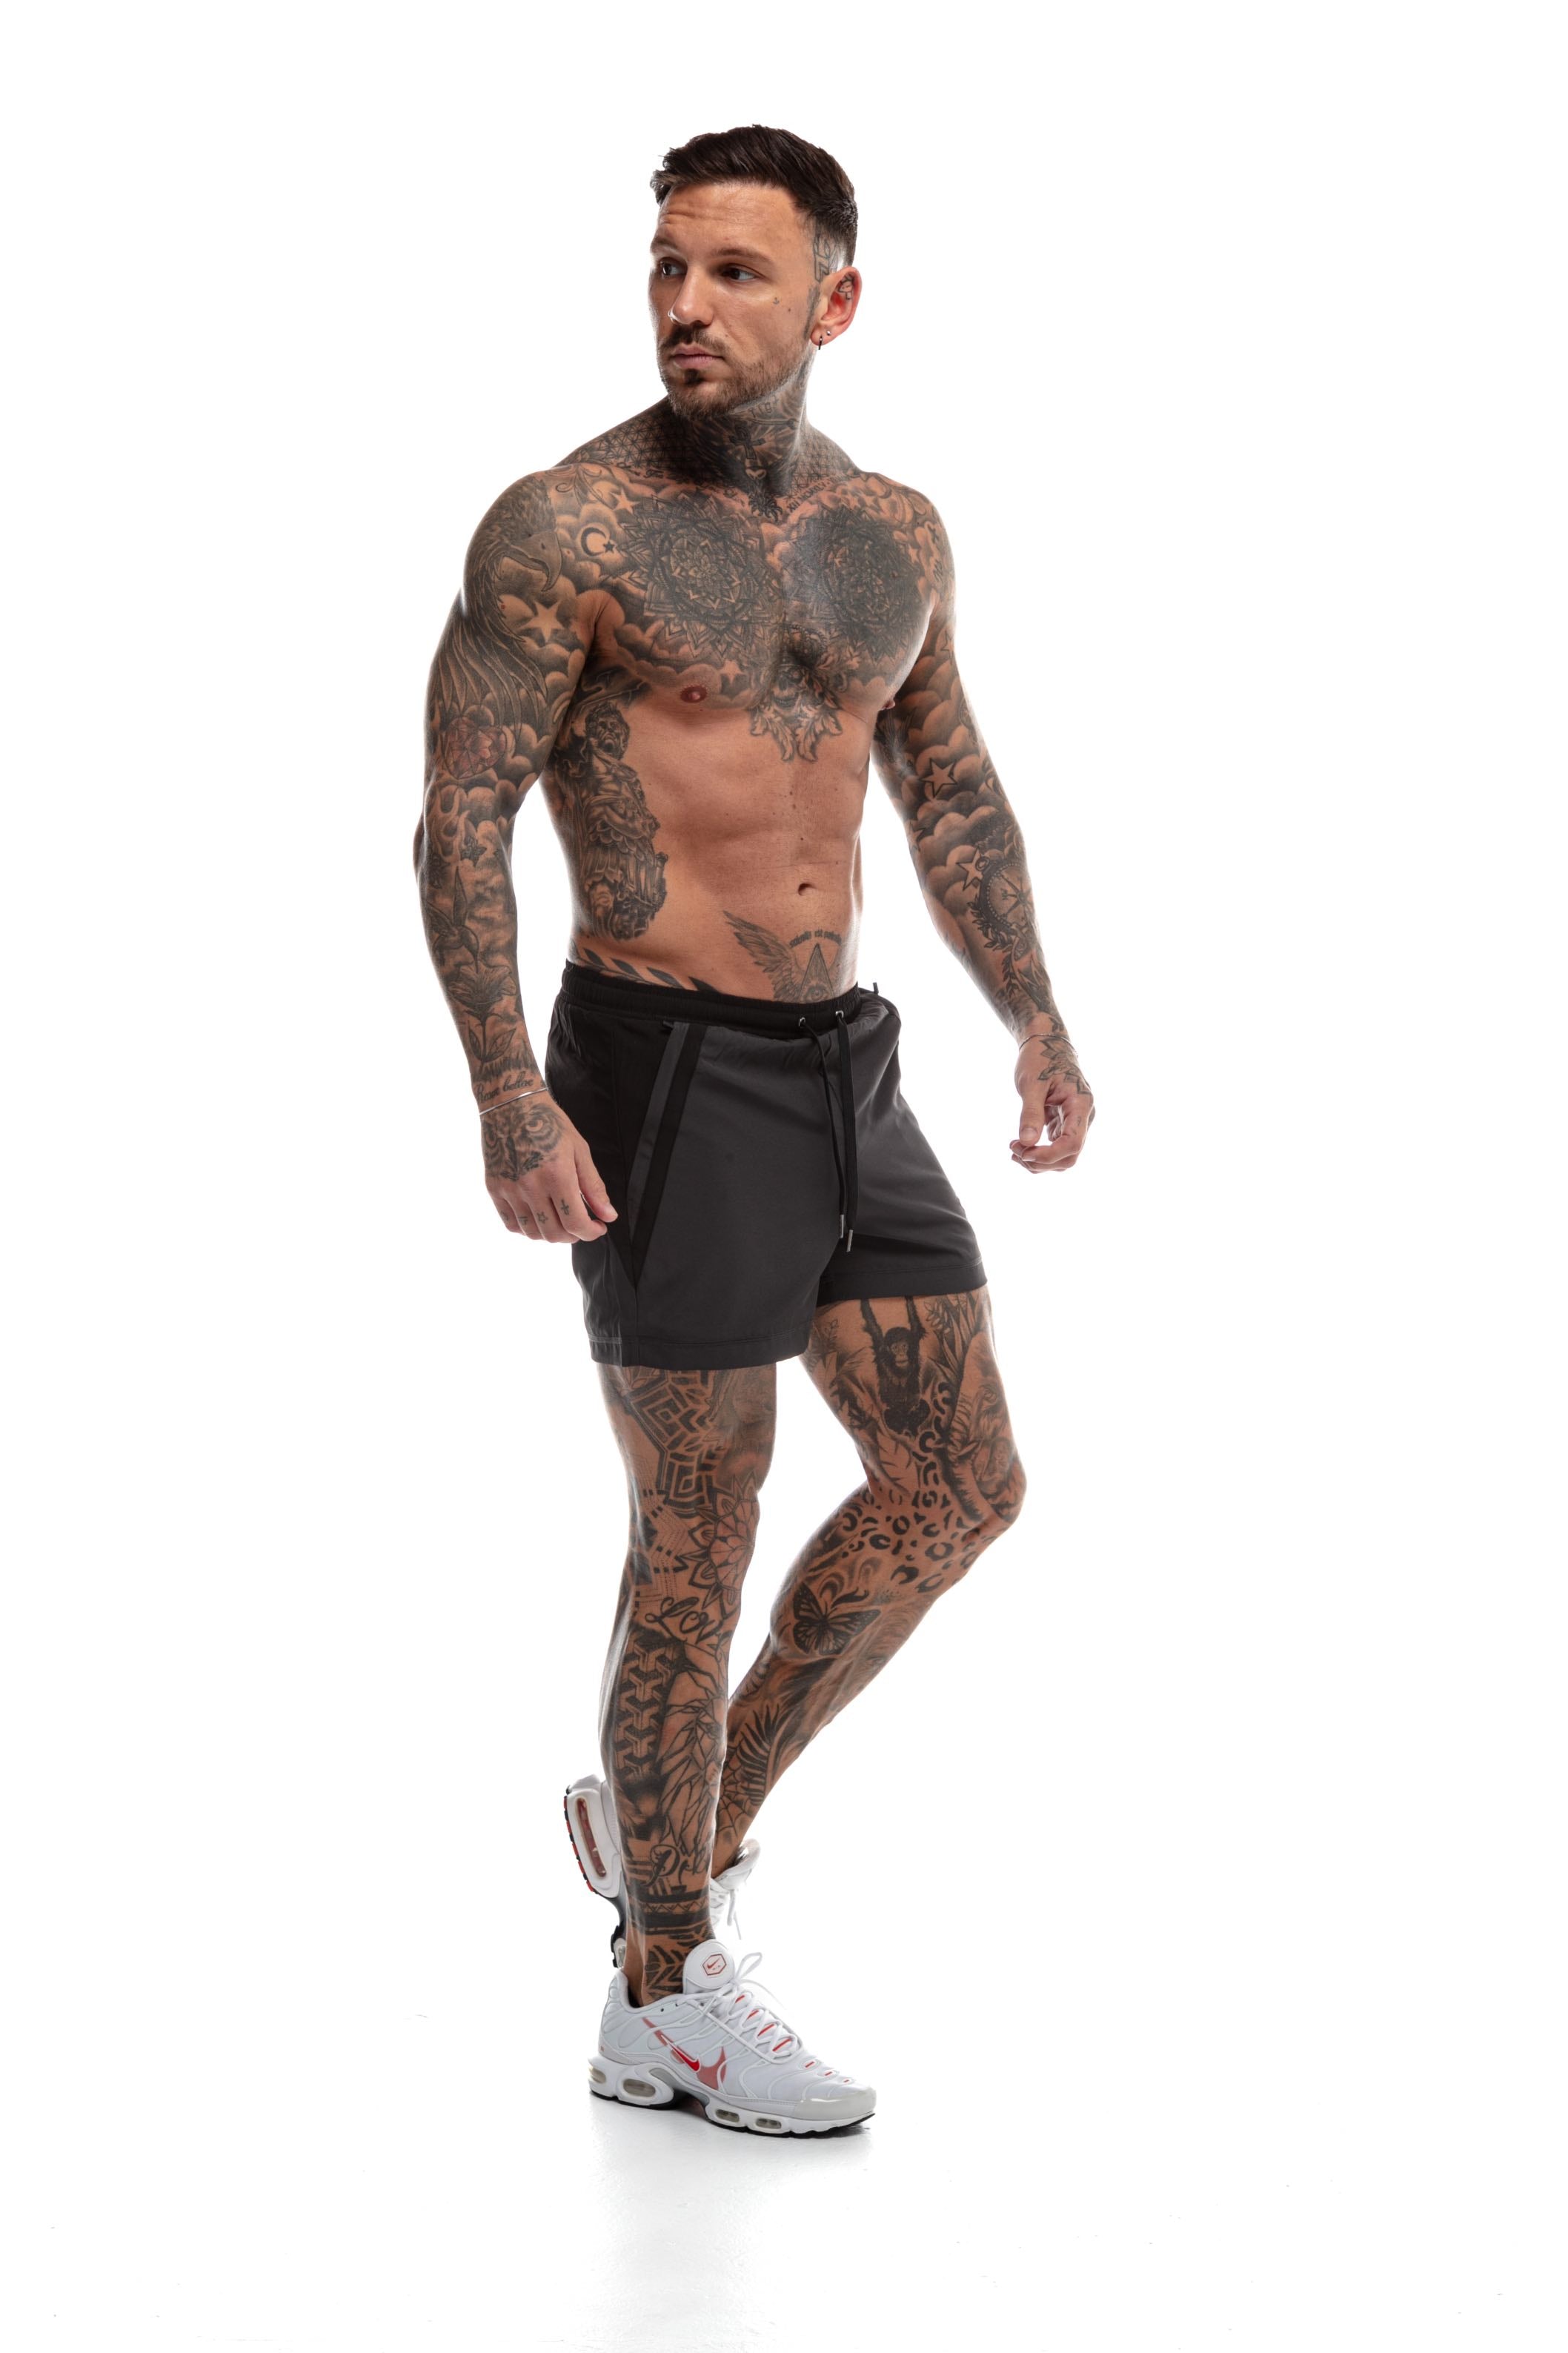 GymFreak Mens Pro Shorts - Grey 3.5 inch